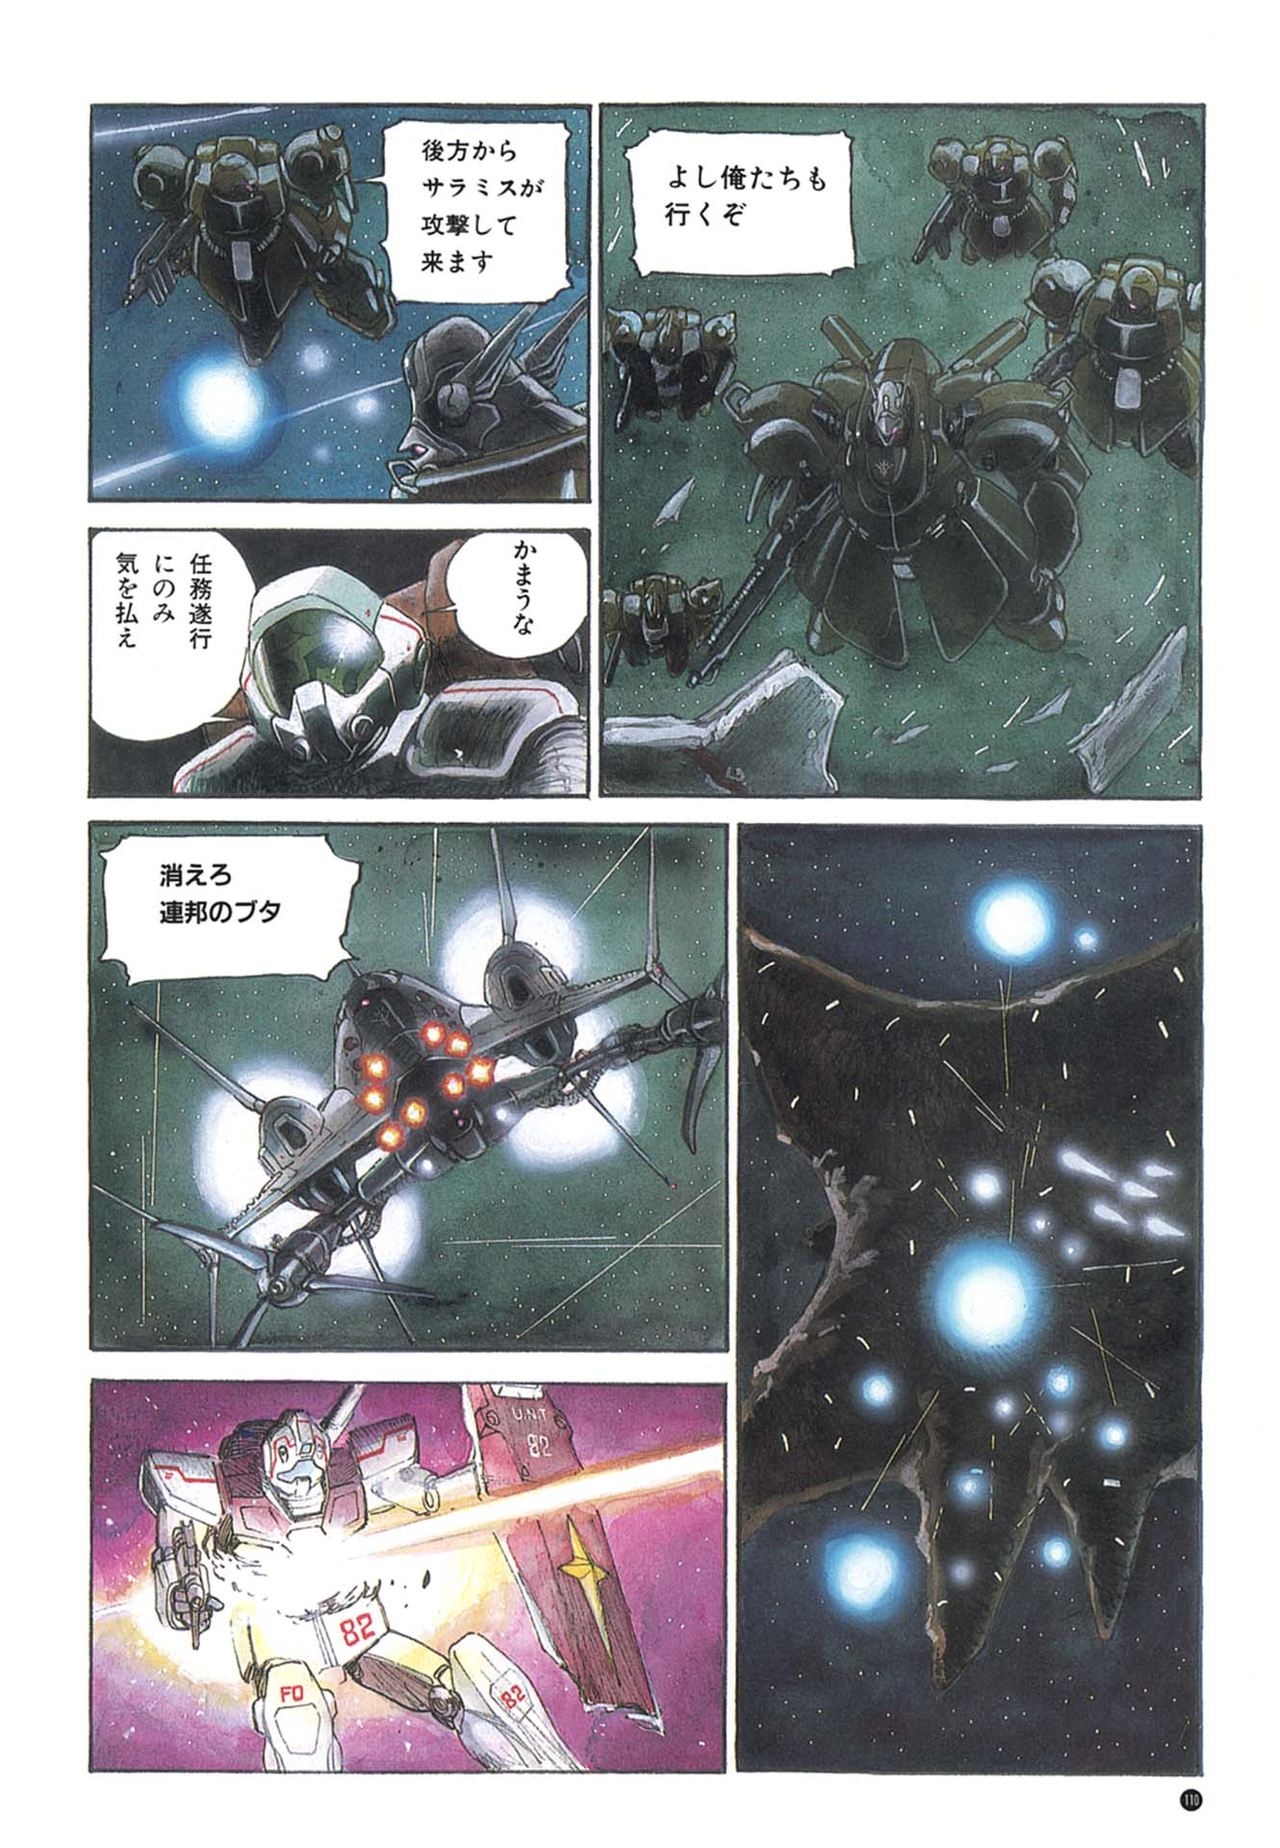 [Kazuhisa Kondo] Kazuhisa Kondo 2D & 3D Works - Go Ahead - From Mobile Suit Gundam to Original Mechanism 109